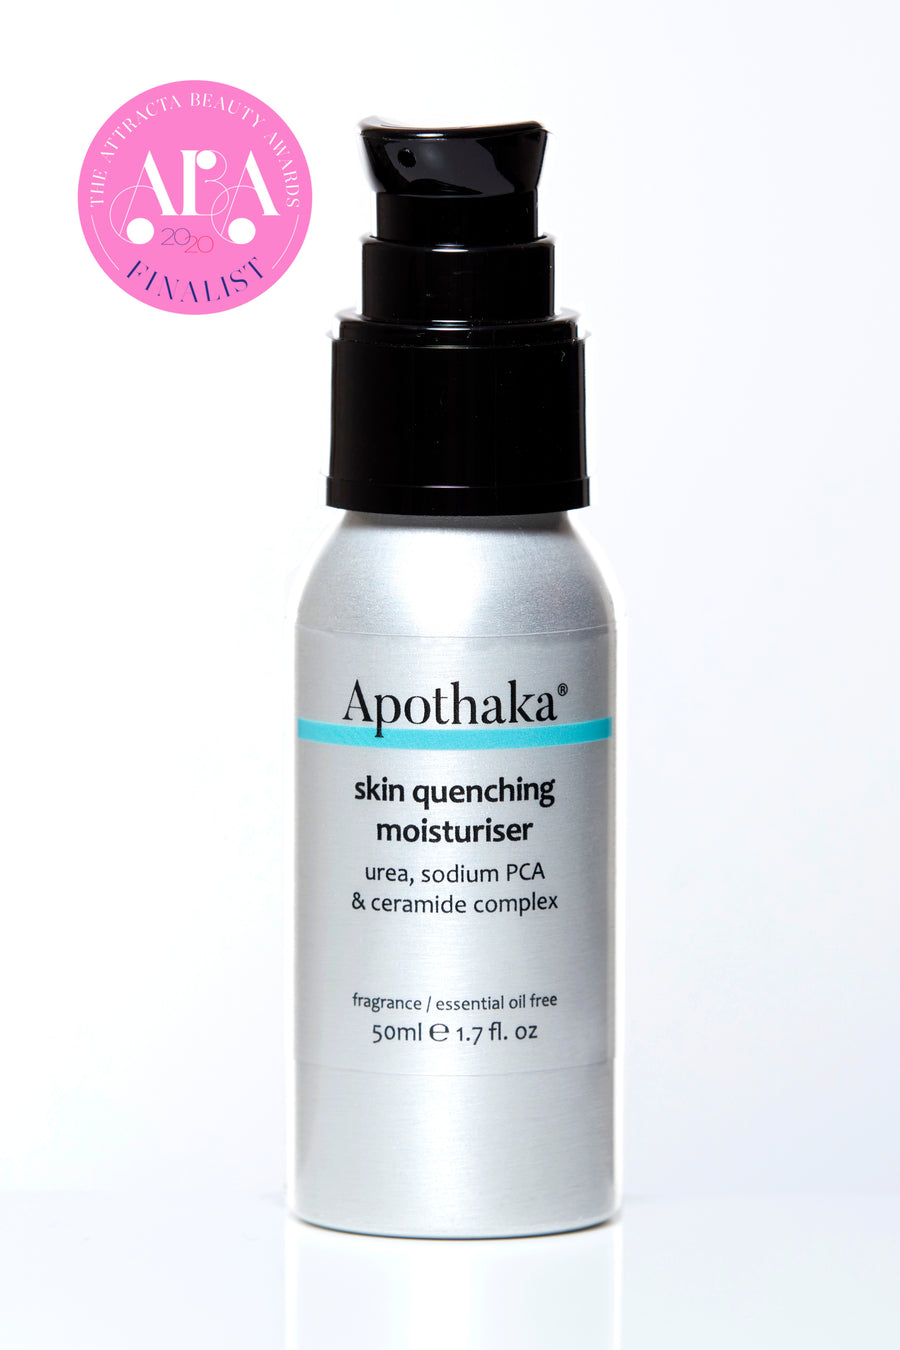 Apothaka fragrance free skin quenching moisturiser with urea, sodium PCA & ceramides